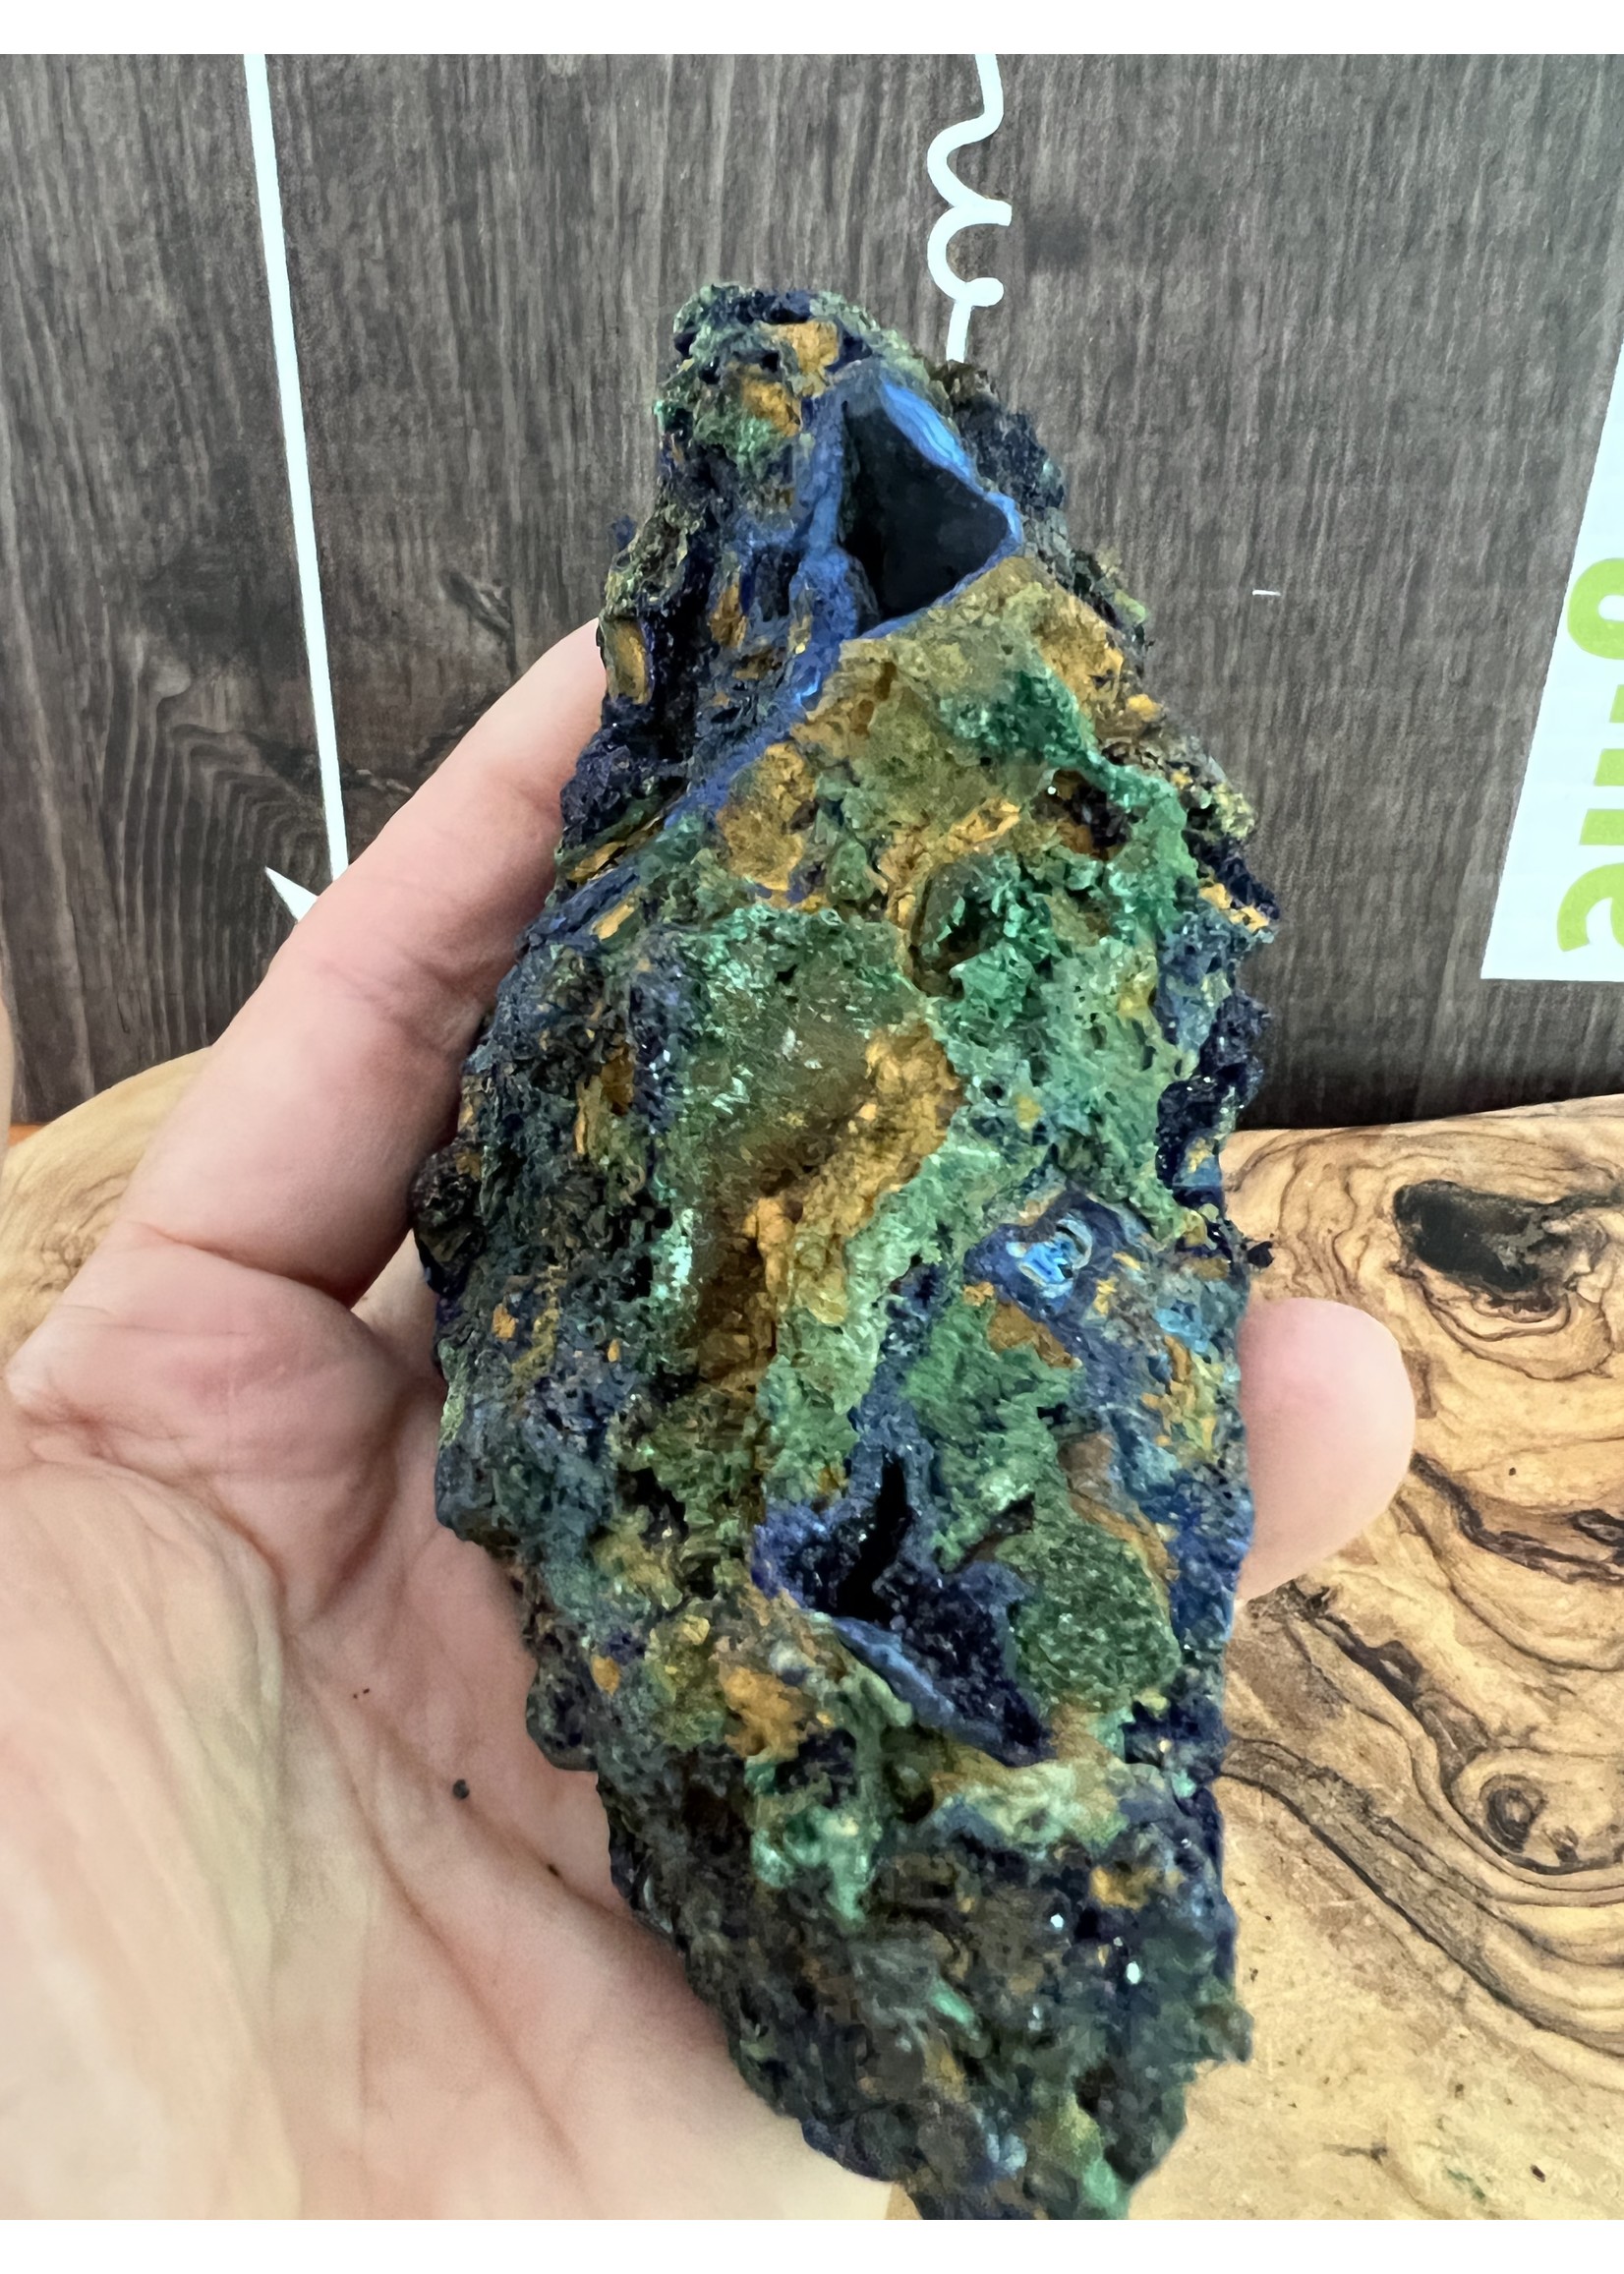 fantastic blue and yellow raw azurite malachite, promotes speedy healing, following surgery